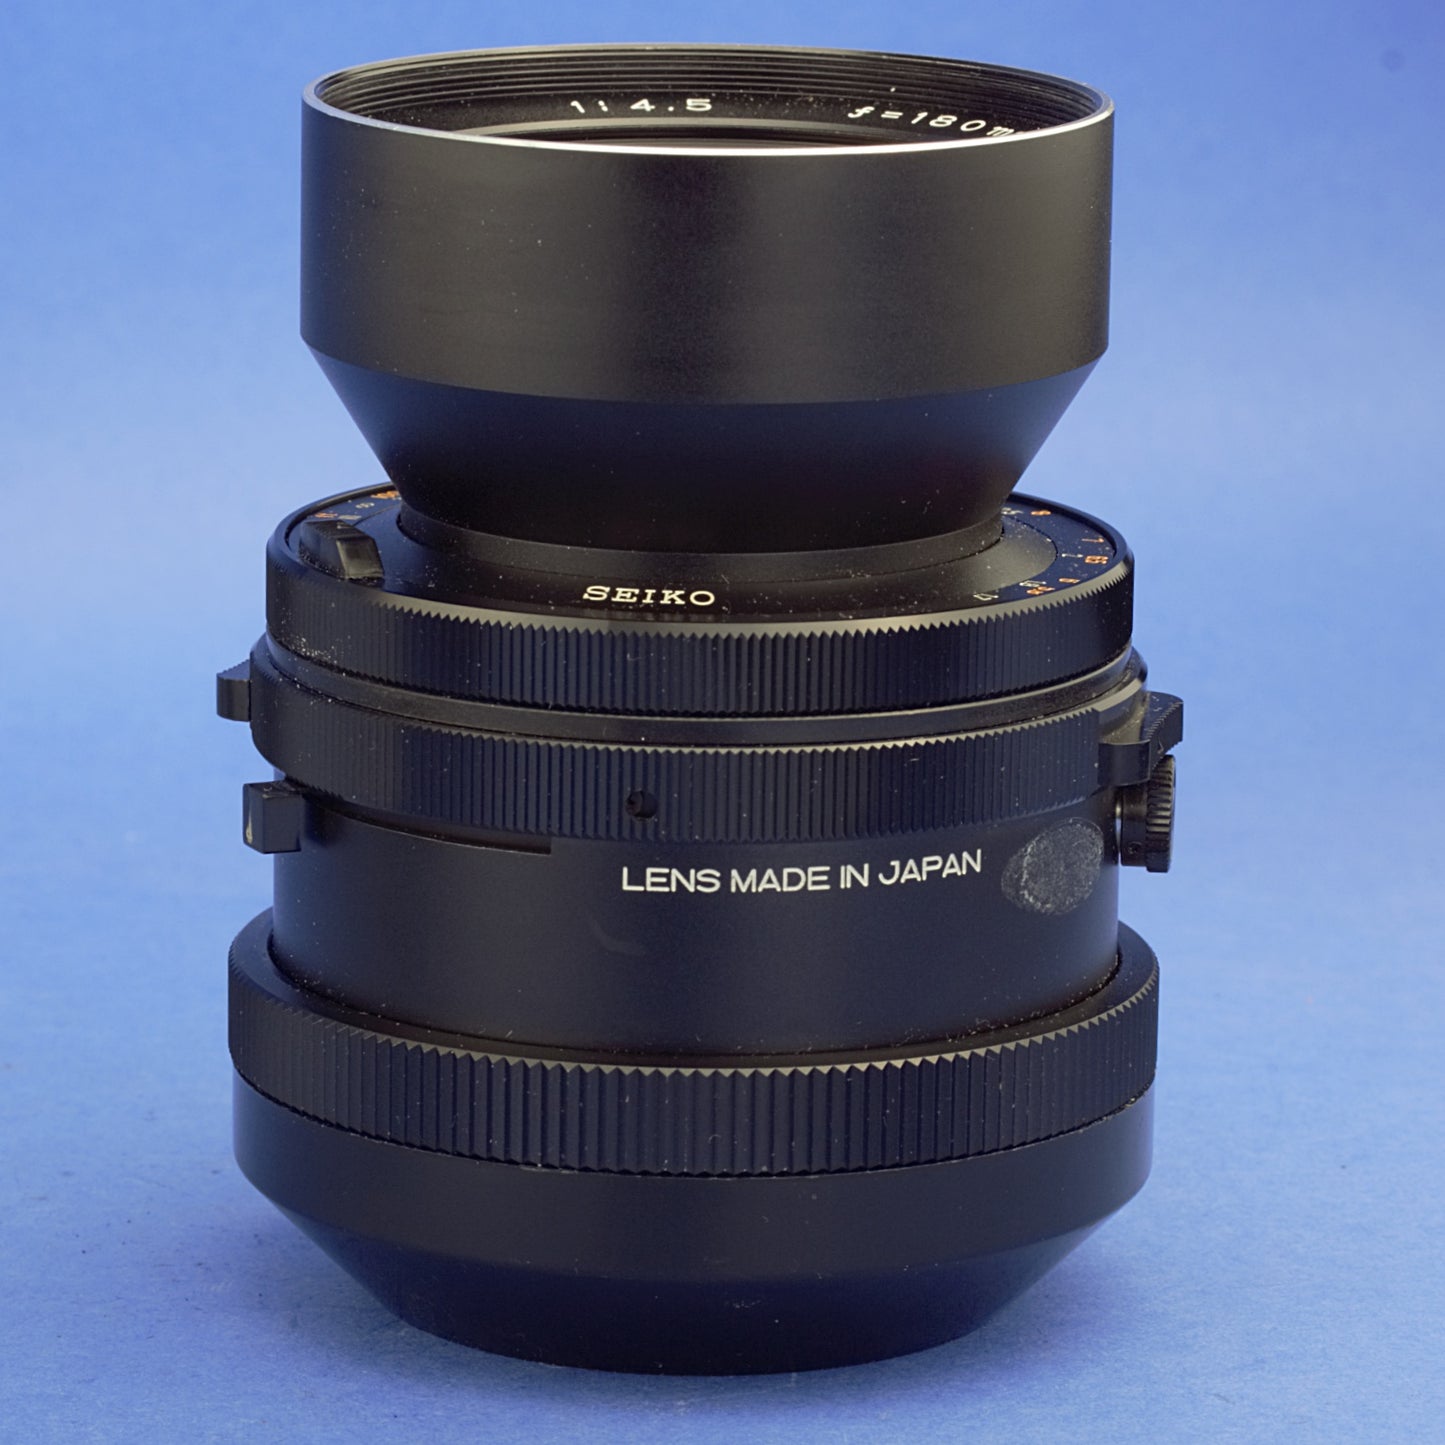 Mamiya RB67 180mm 4.5 Lens